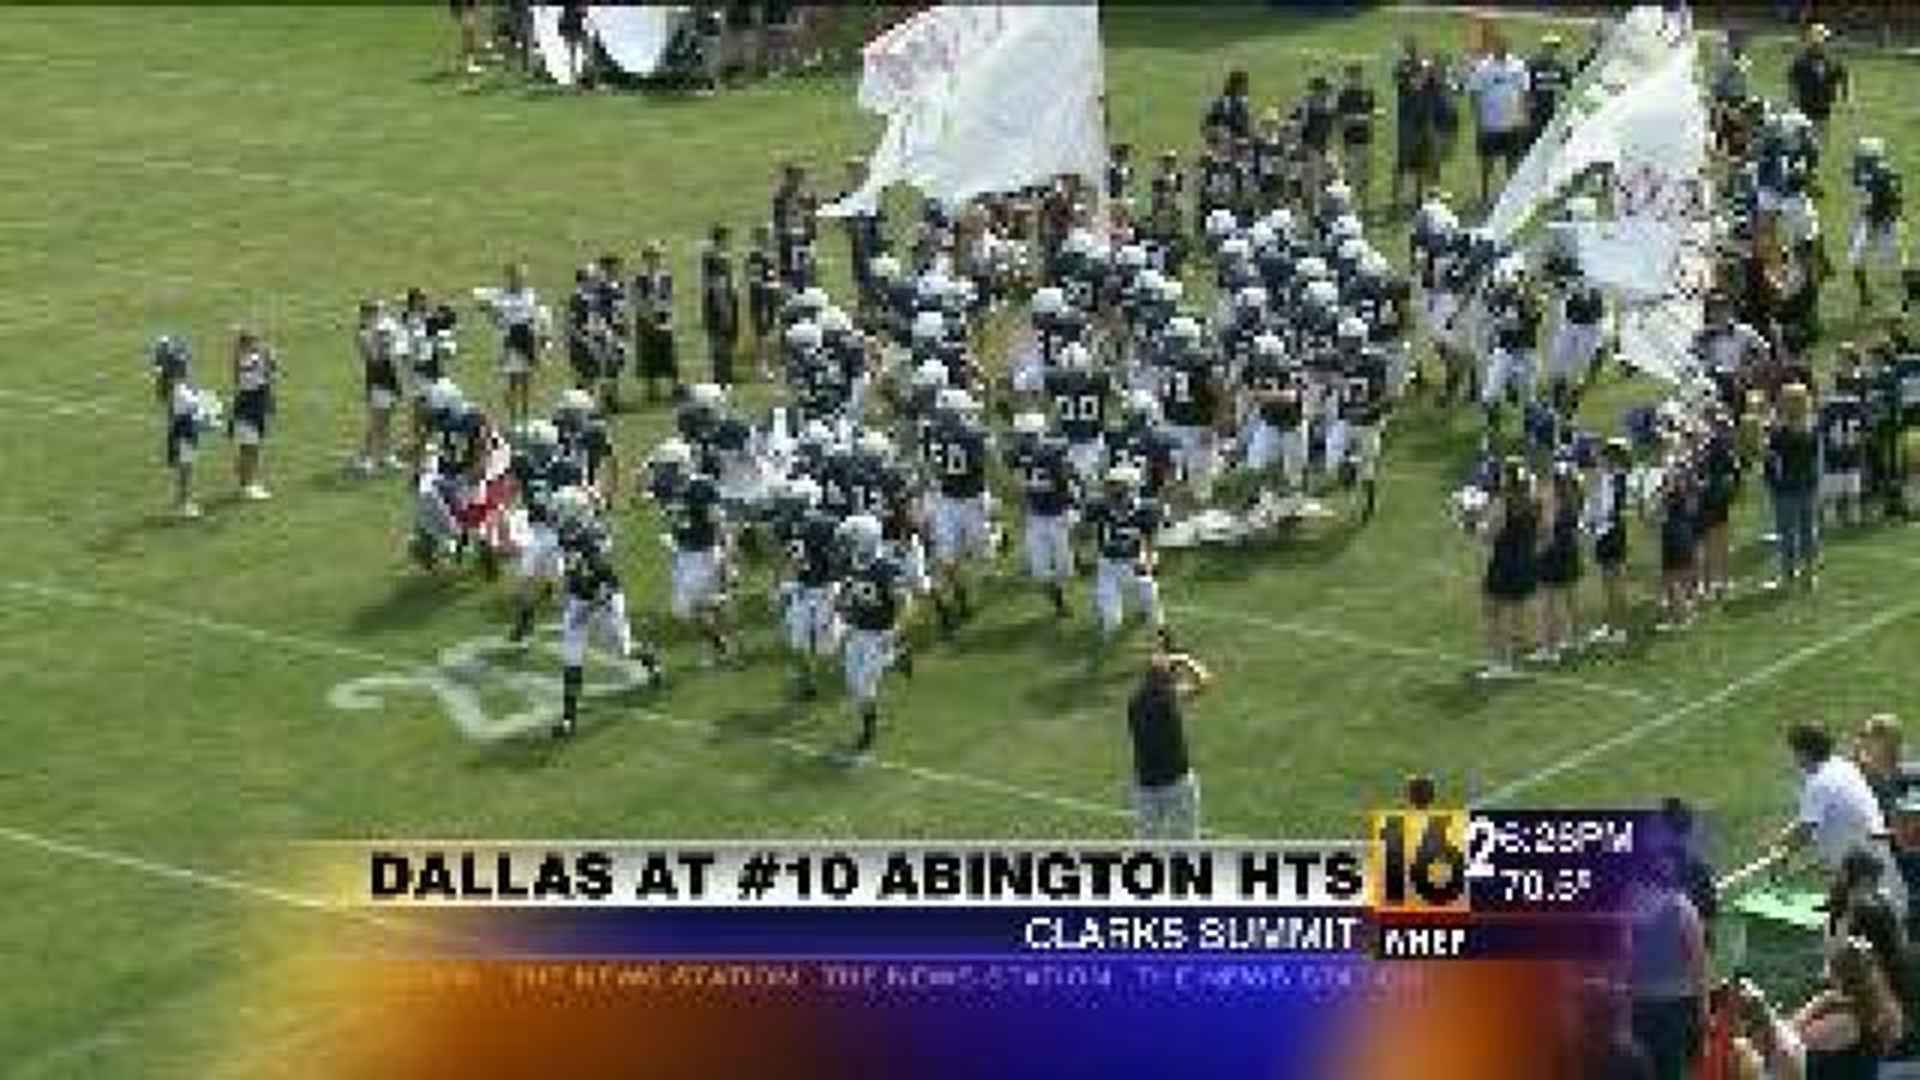 #10 Abington Heights Blanks Dallas